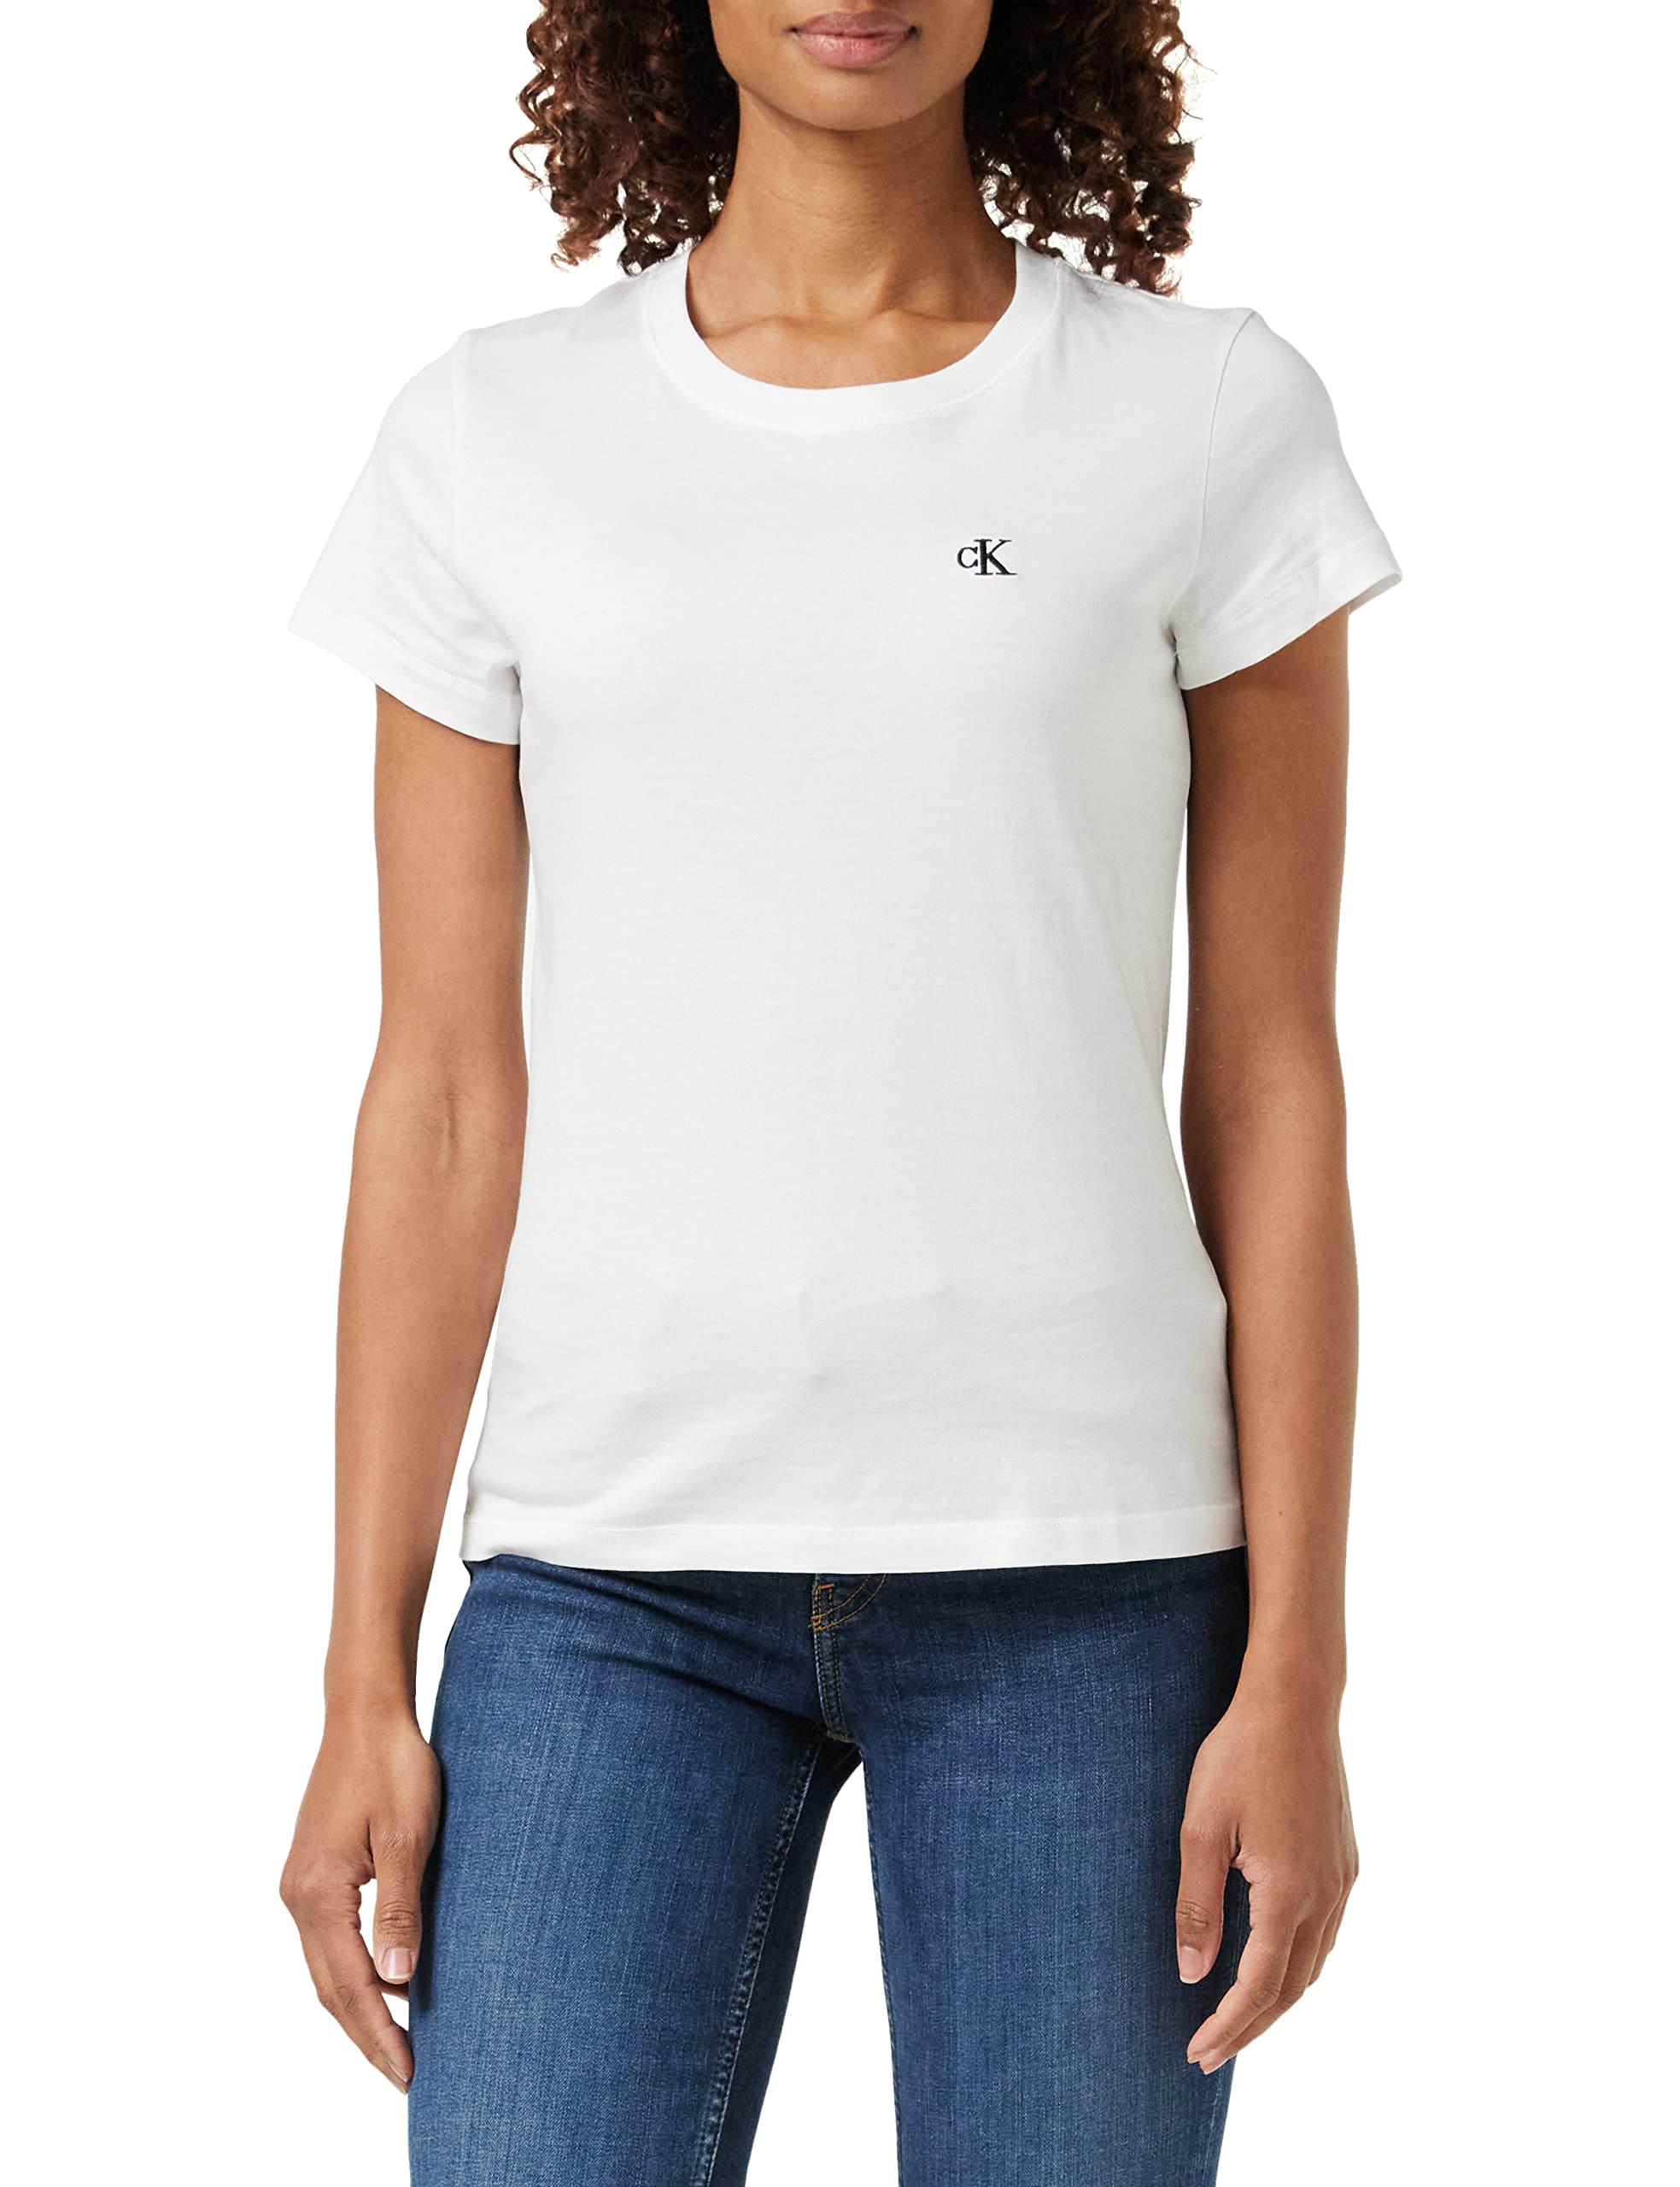 Calvin Klein Jeans Damen T-Shirt Kurzarm Ck Embroidery Rundhalsausschnitt, Weiß (Bright White), XL